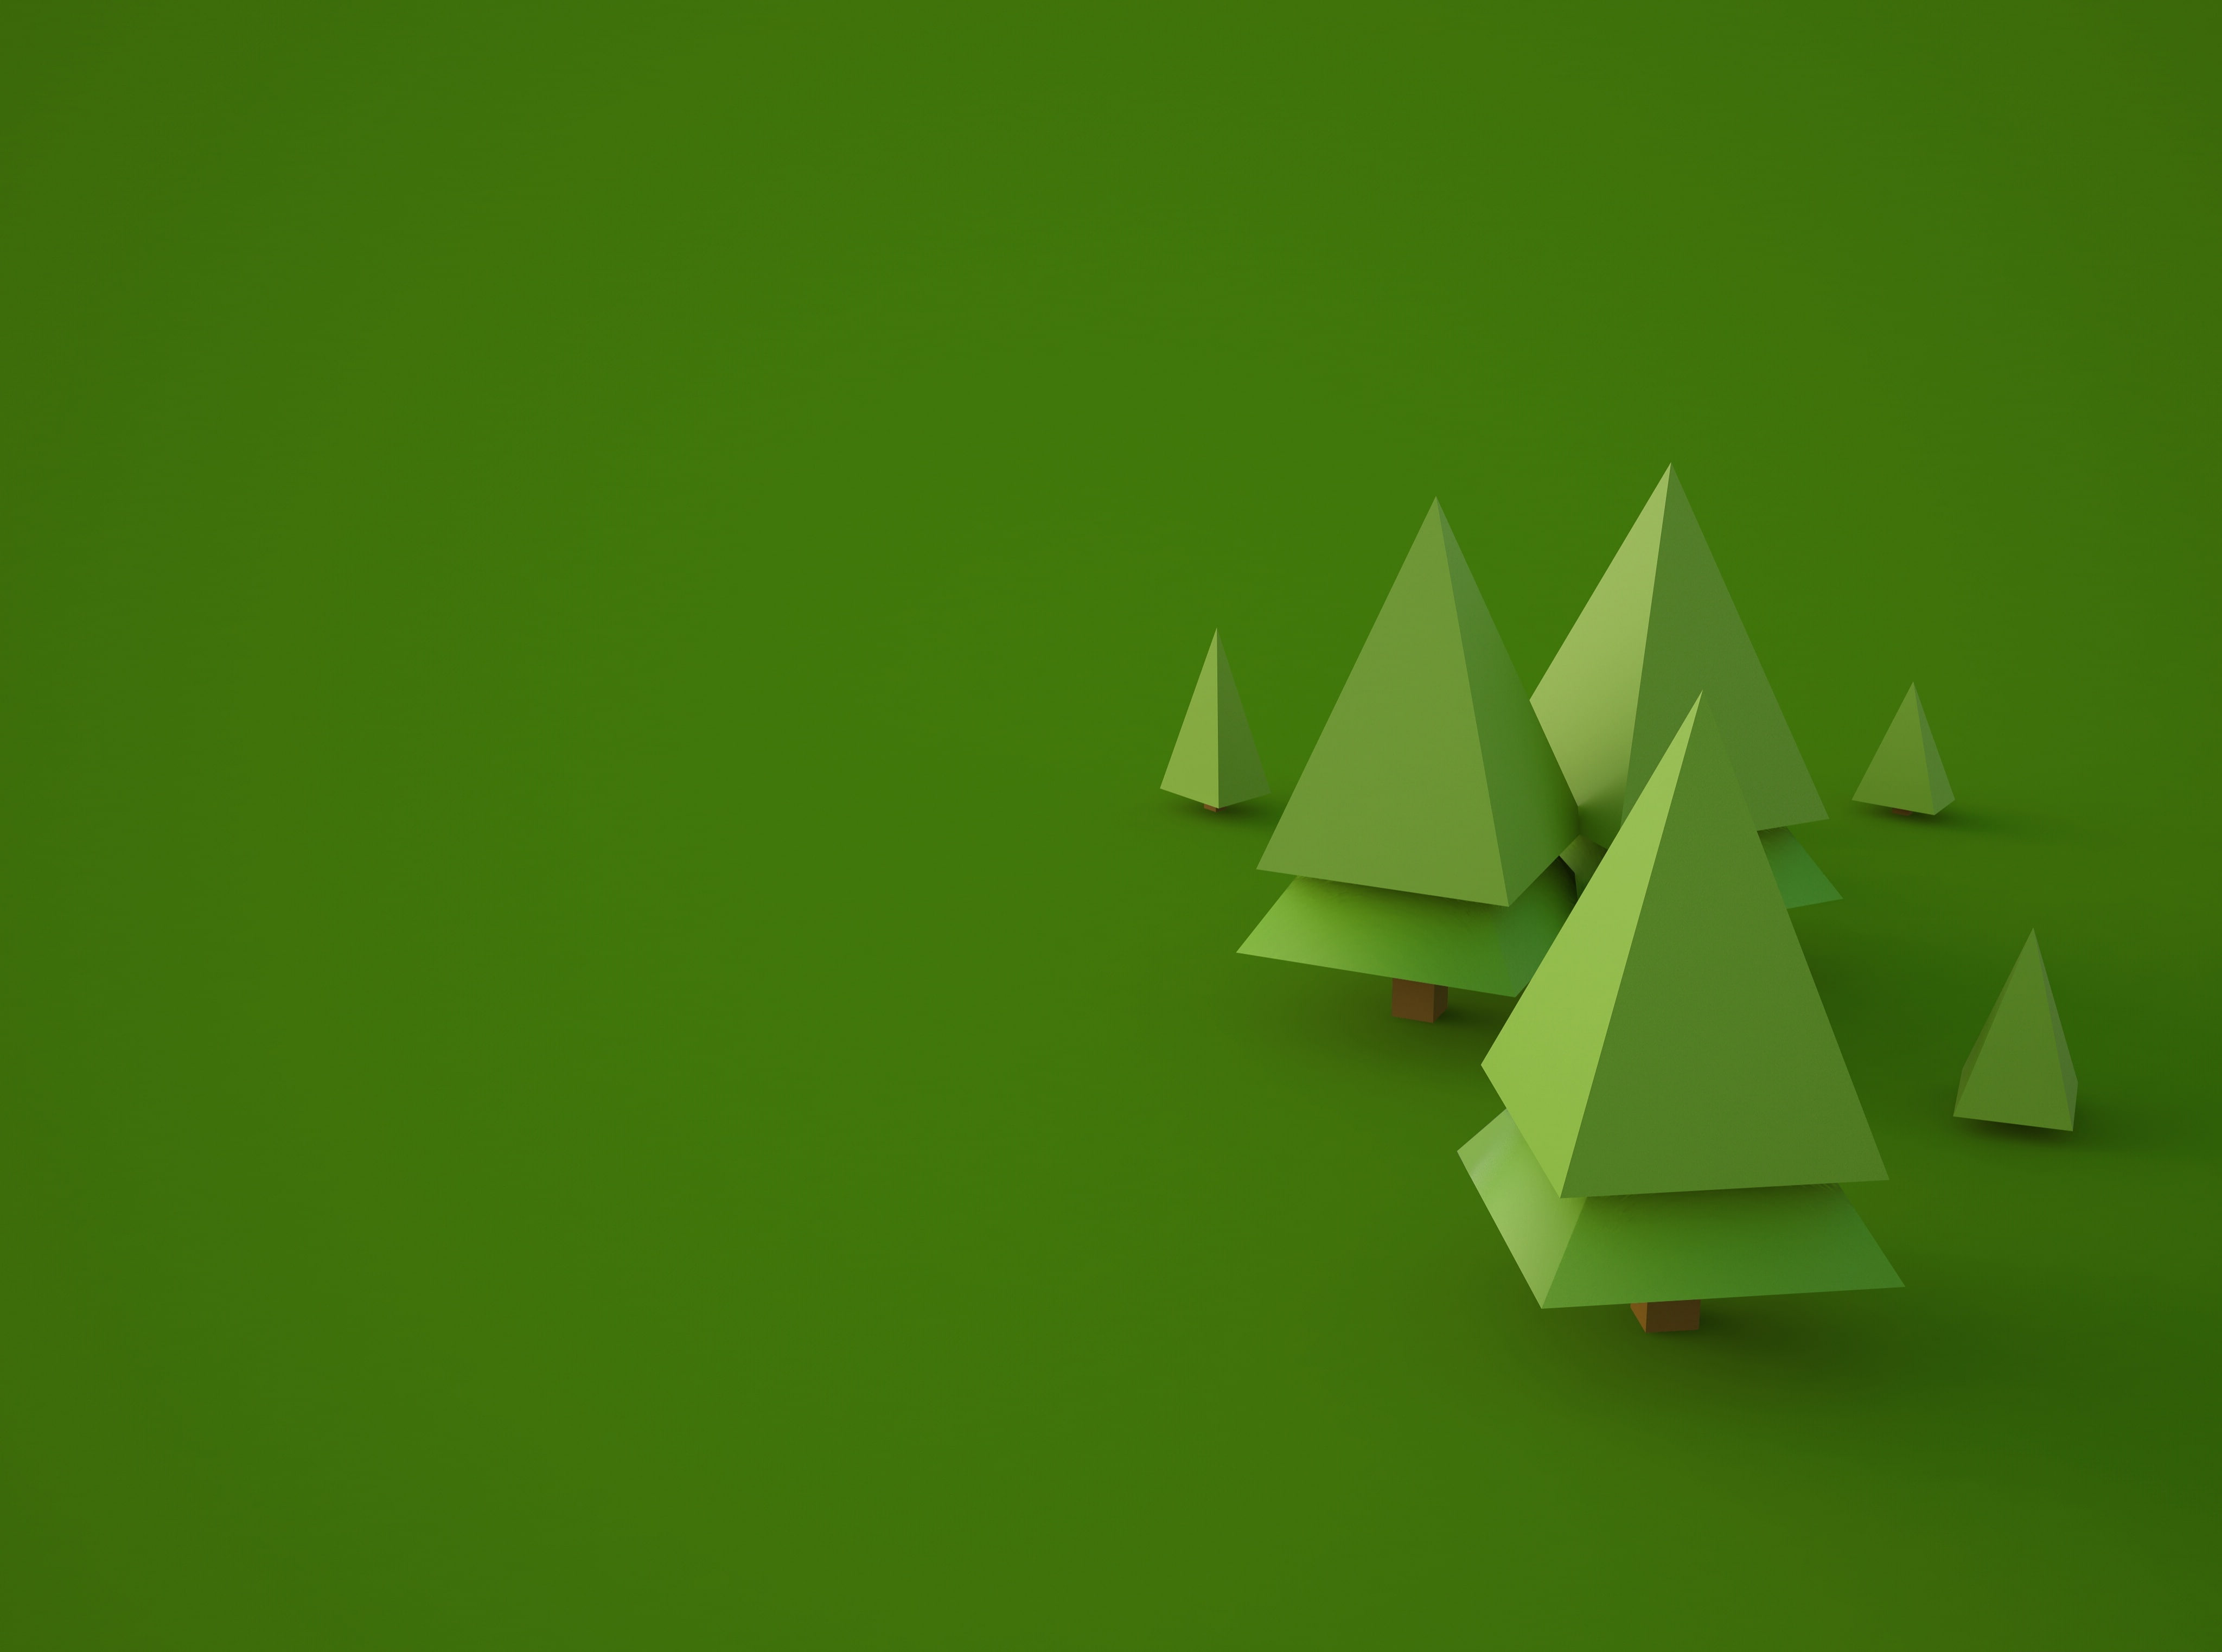 Low Poly Trees by Larix Studio, Artistic, 3D, minimal, green